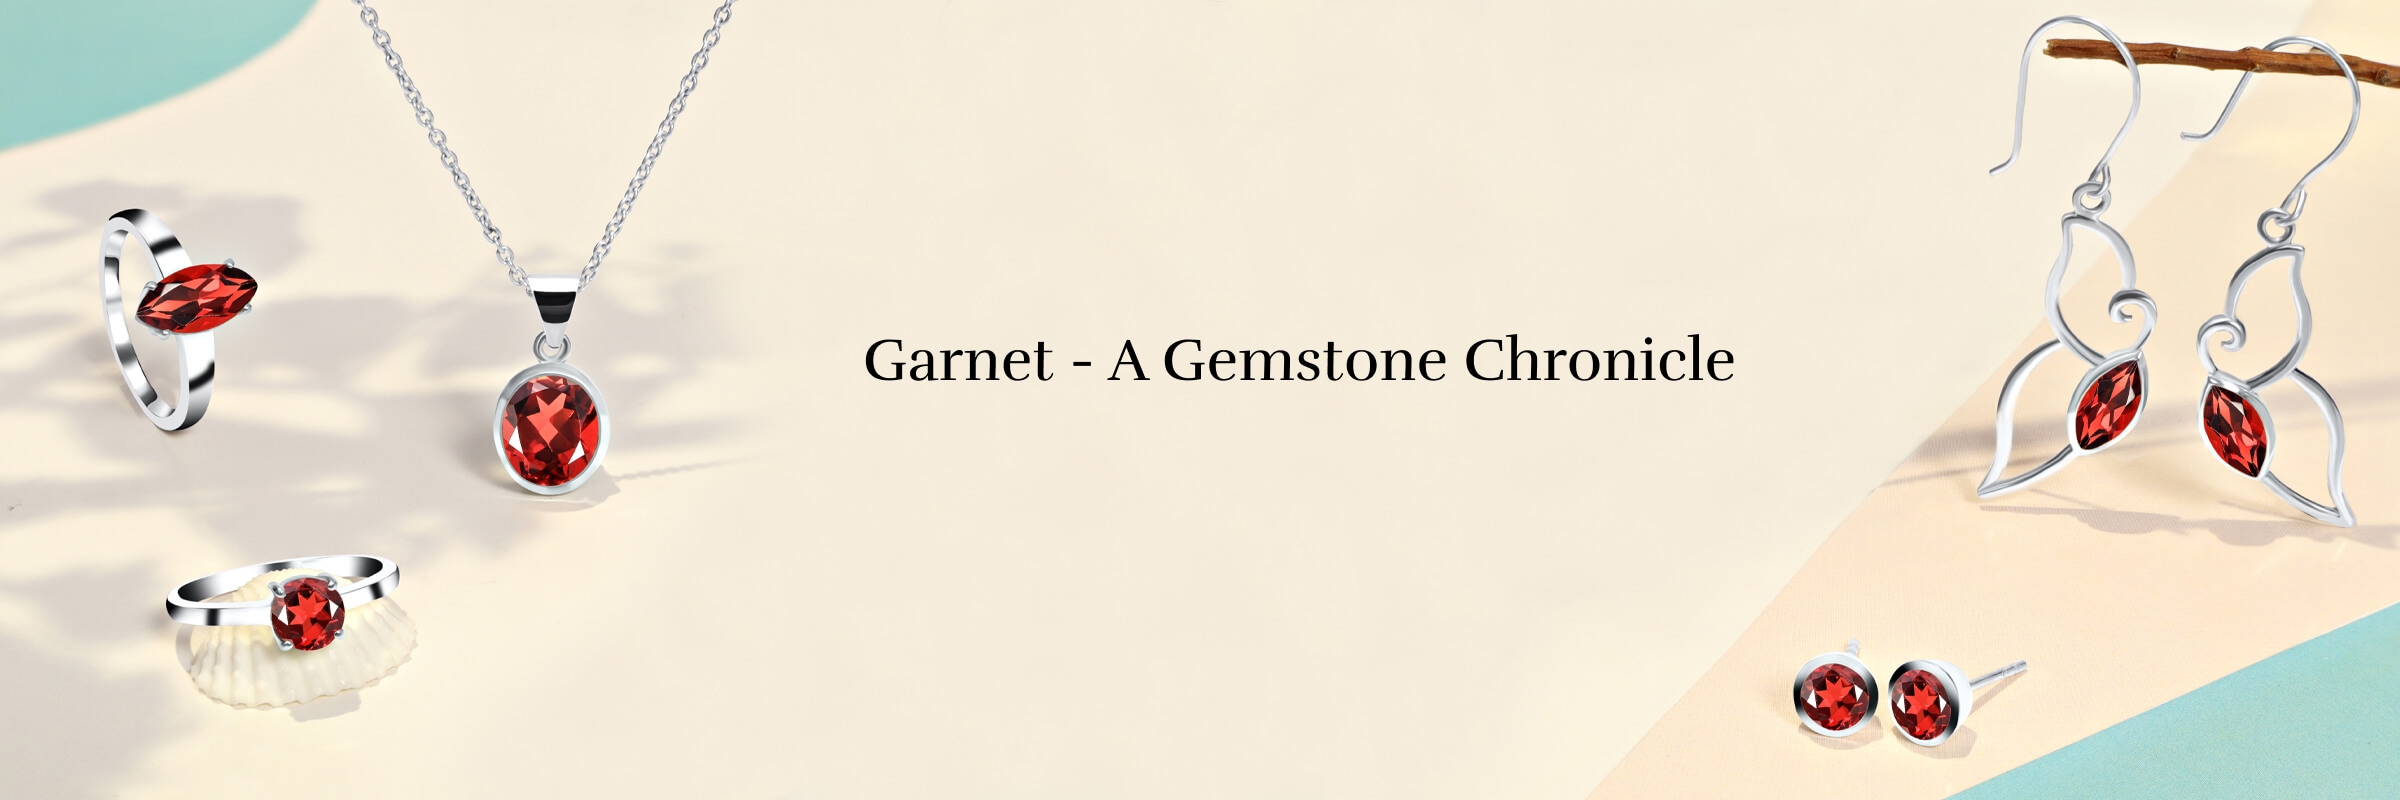 History of Garnet